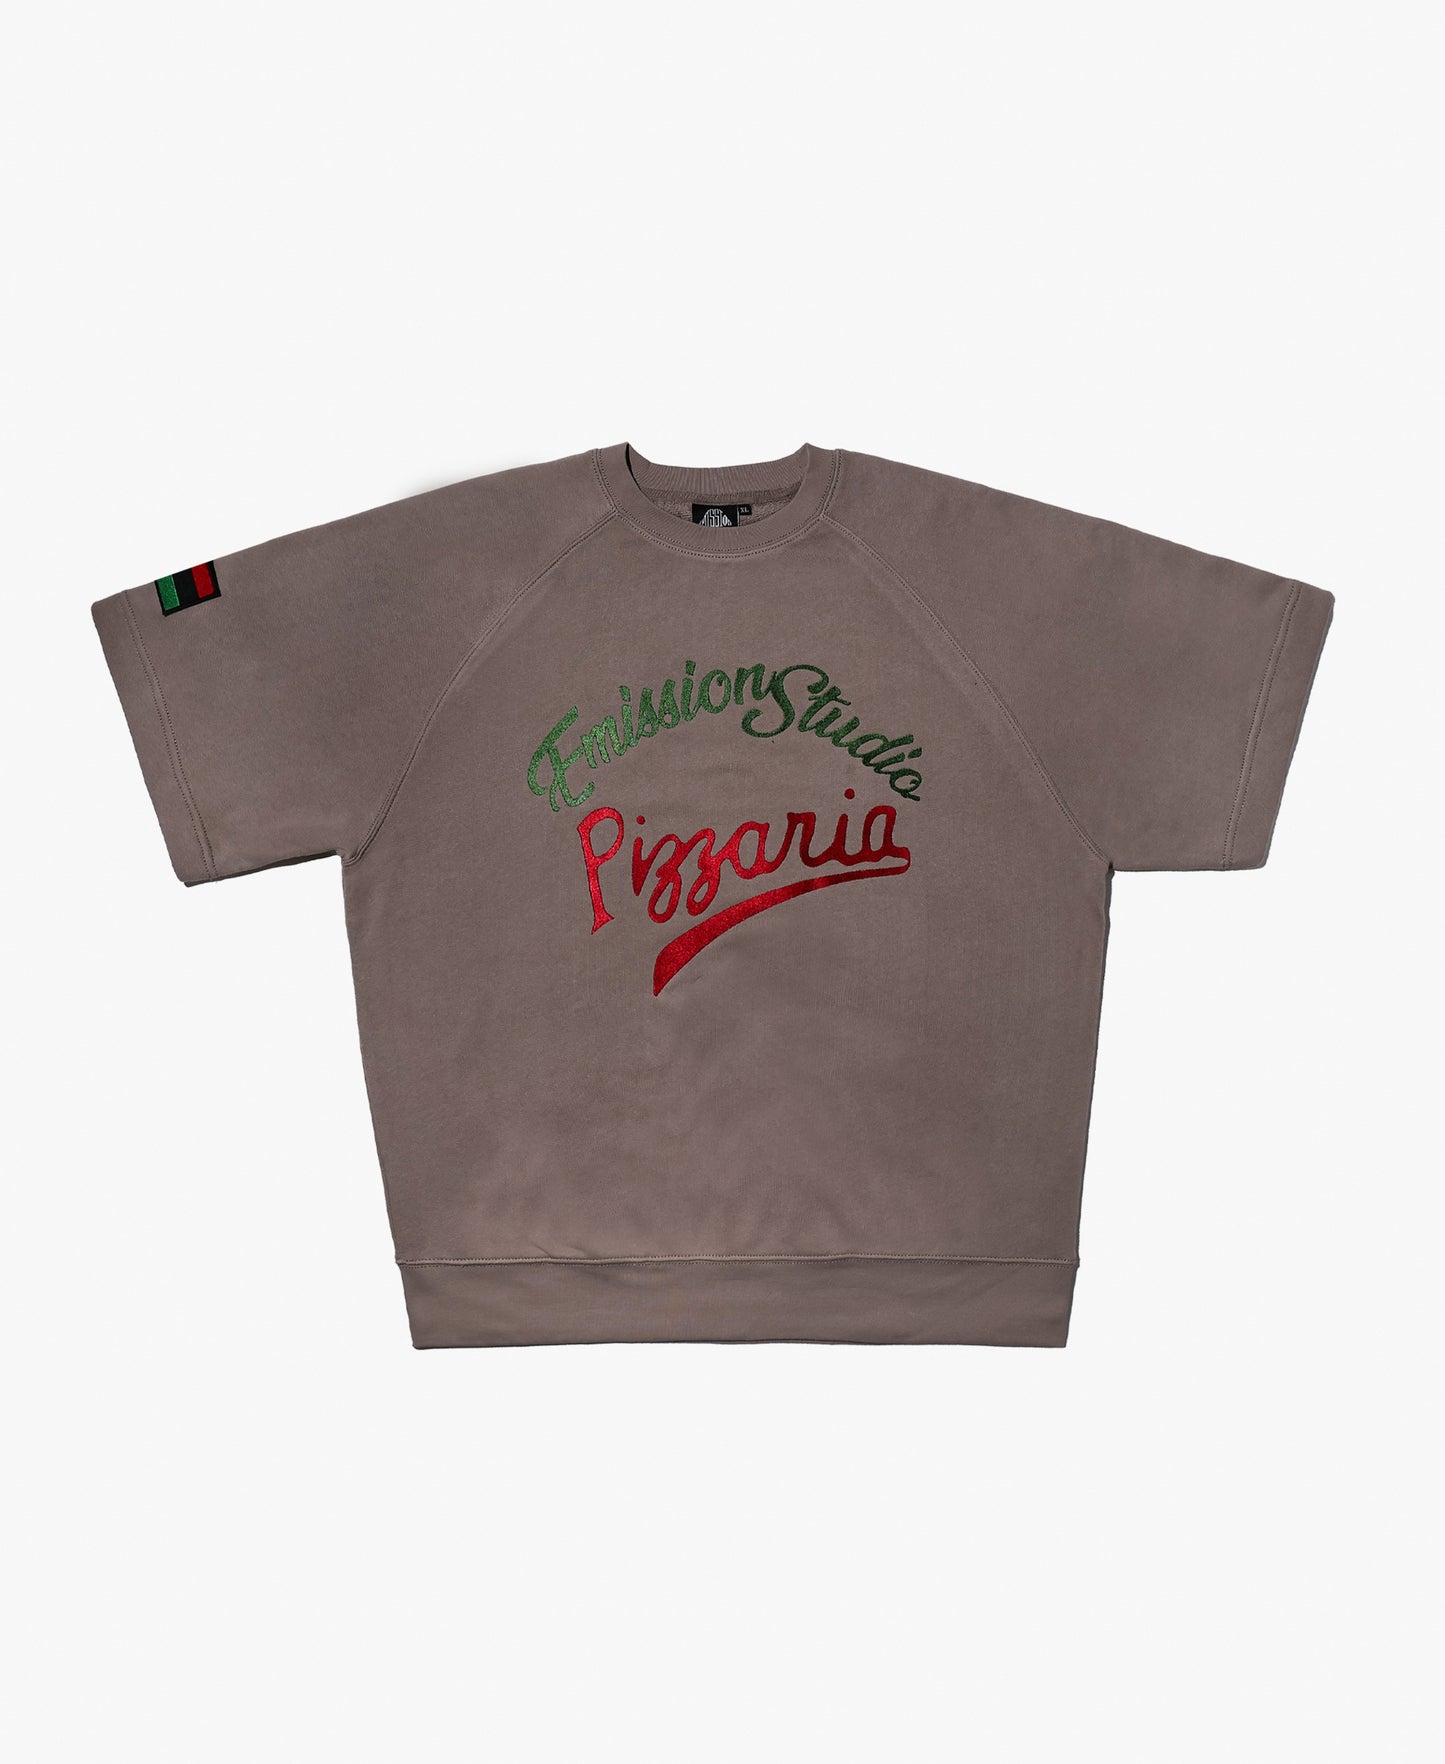 Emission’s pizza Sweat t-shirt